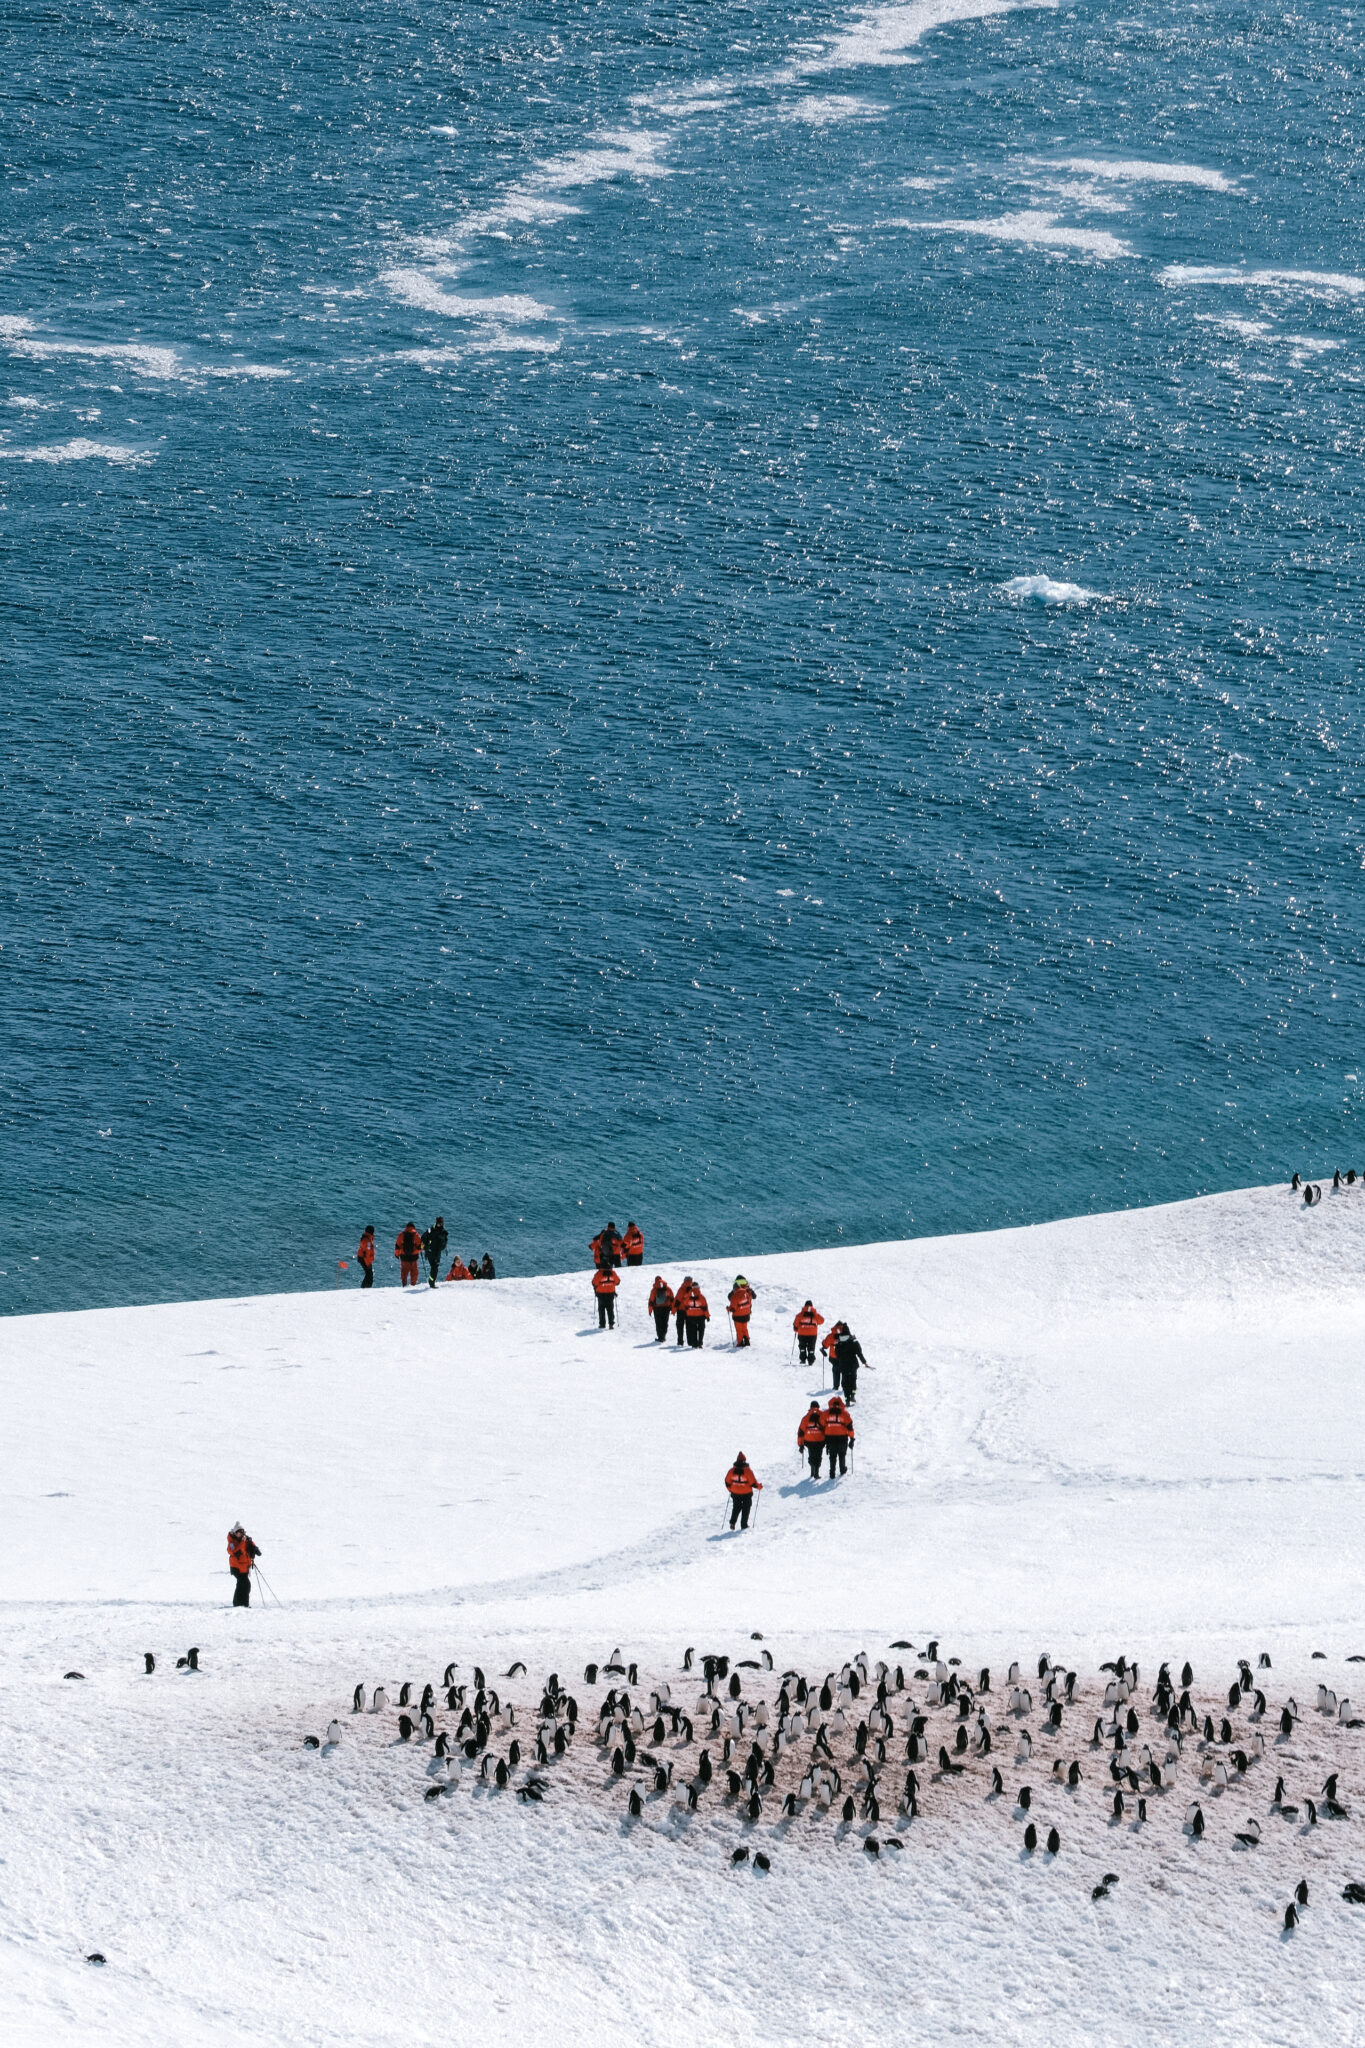 Photography Isabelle Vermeersch for Voyage Voyage in Antarctica